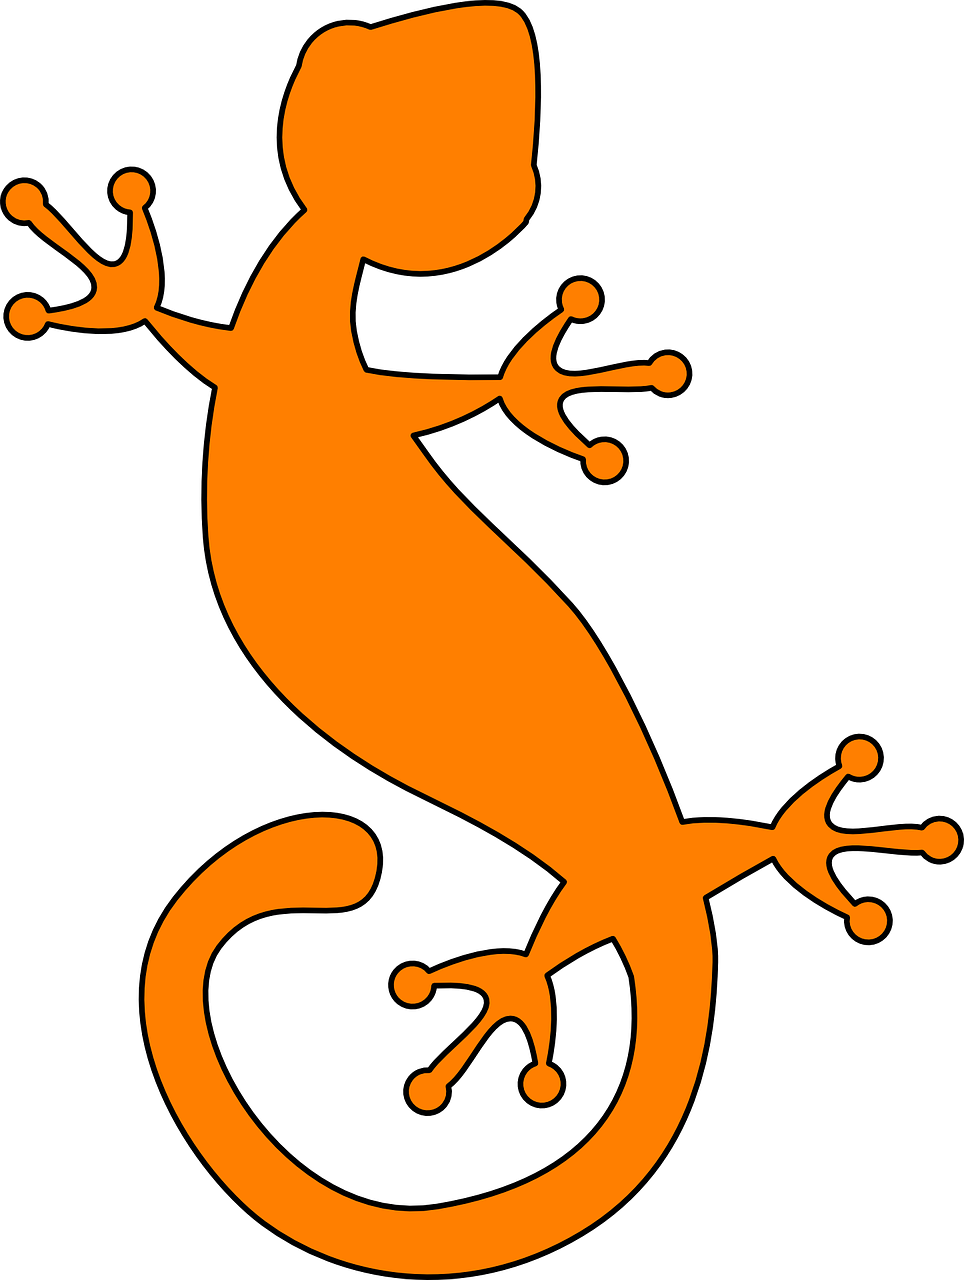 A Orange Lizard With Black Background